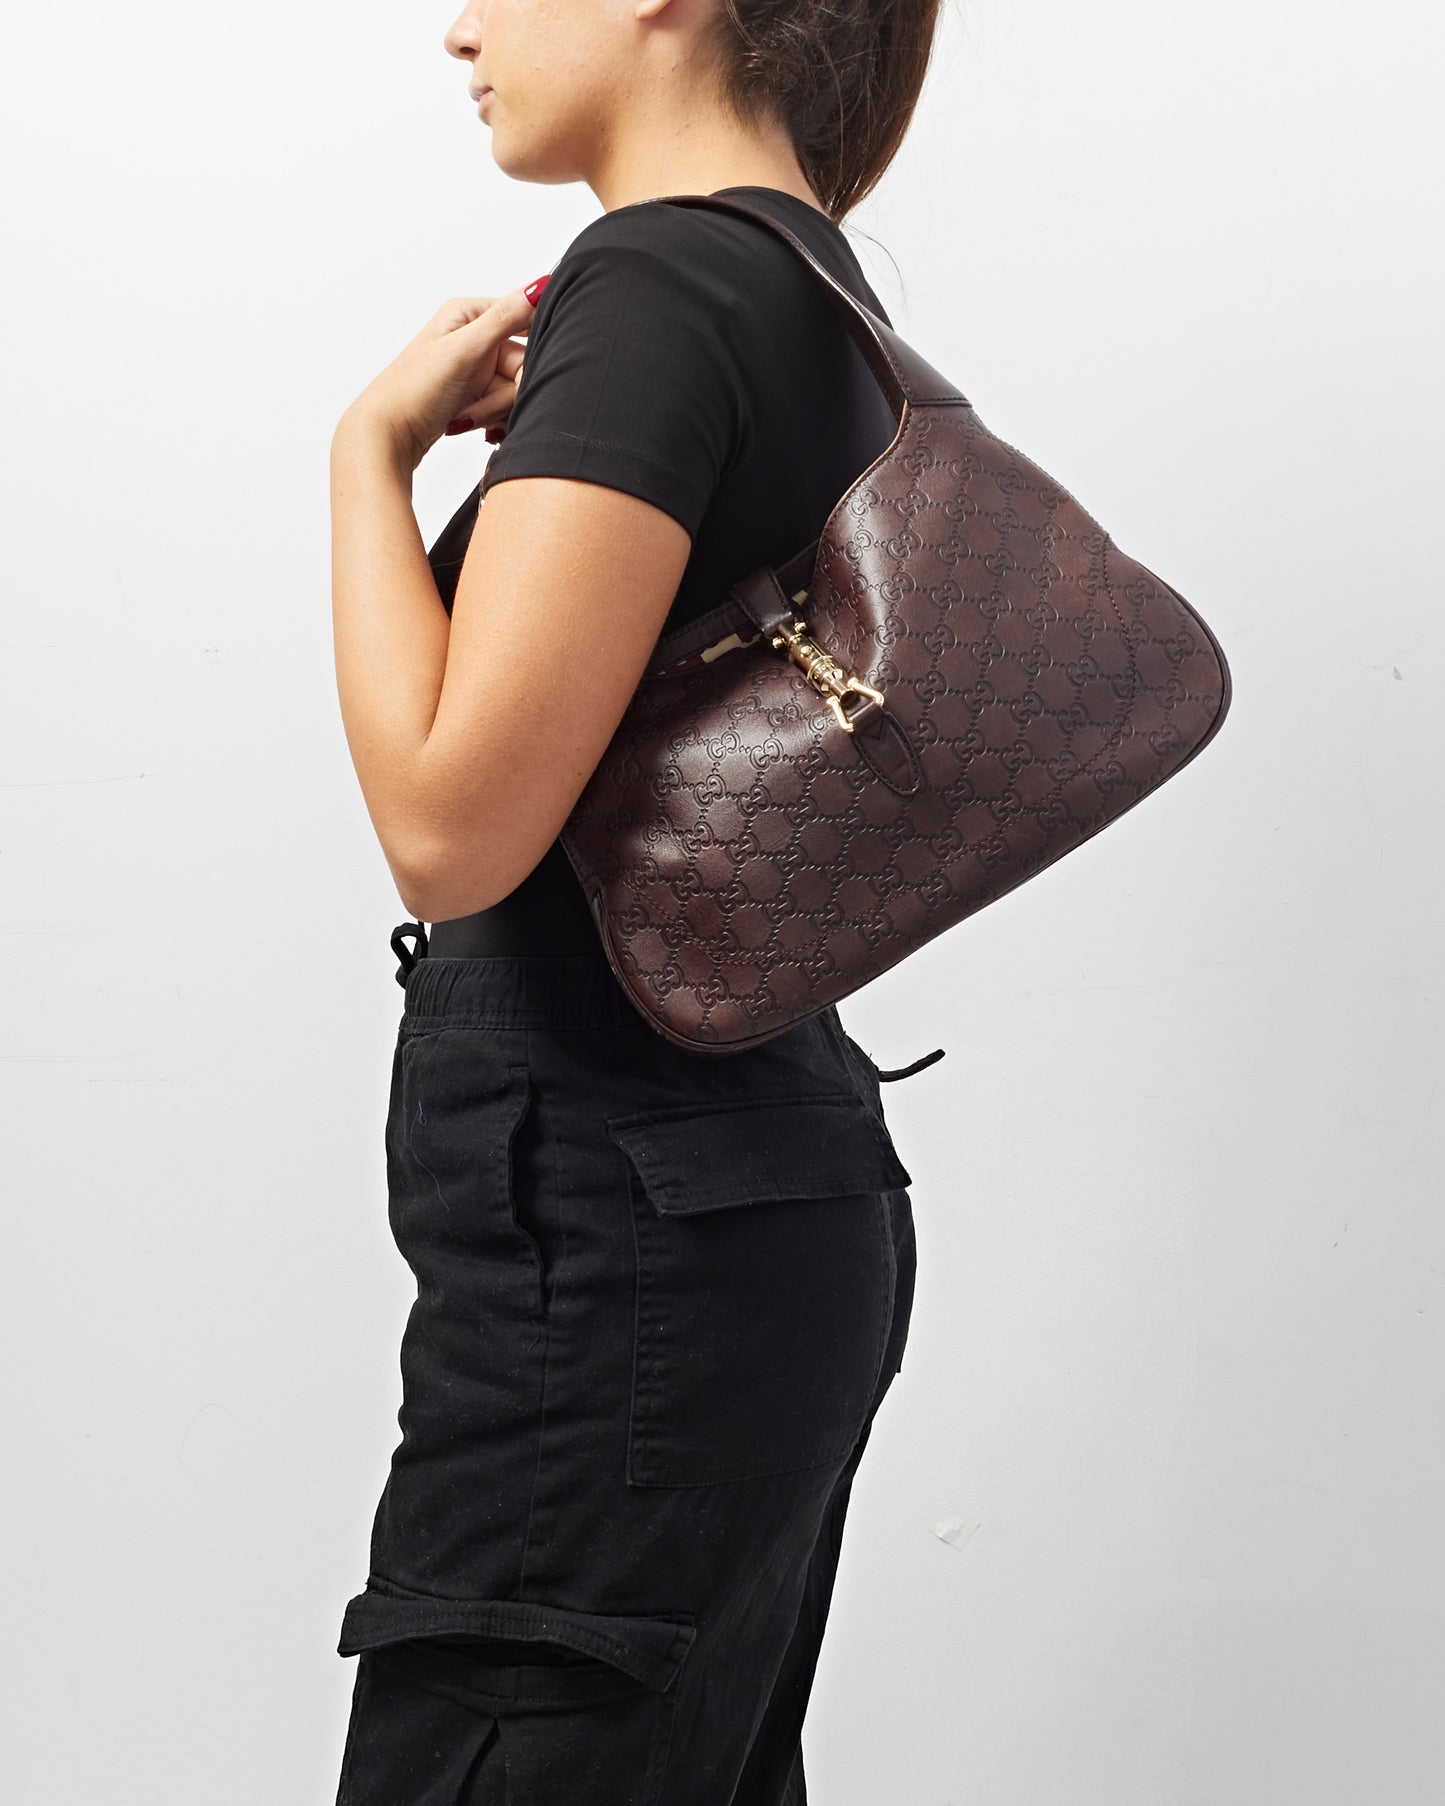 Gucci Brown Leather Guccissima Jackie Shoulder Bag